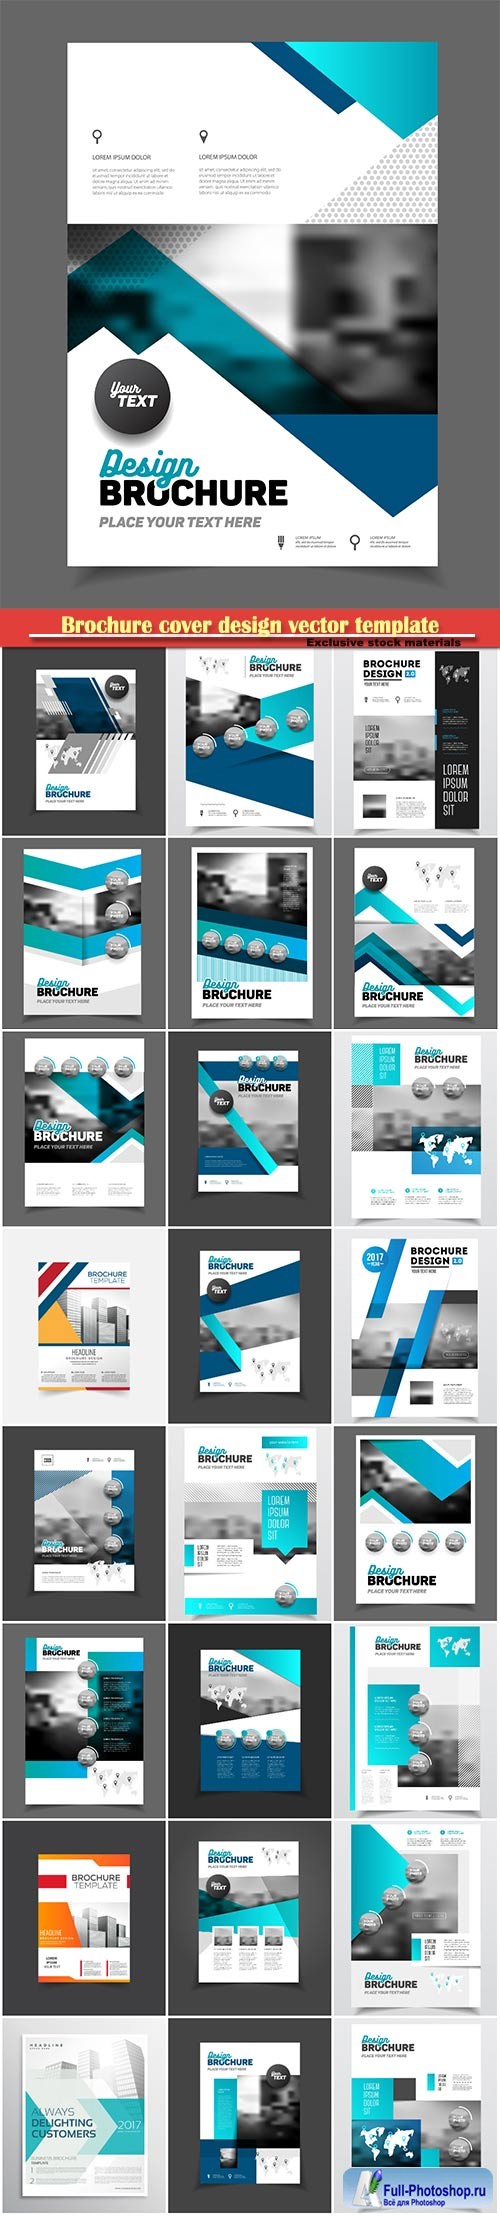 Brochure cover design vector template # 16